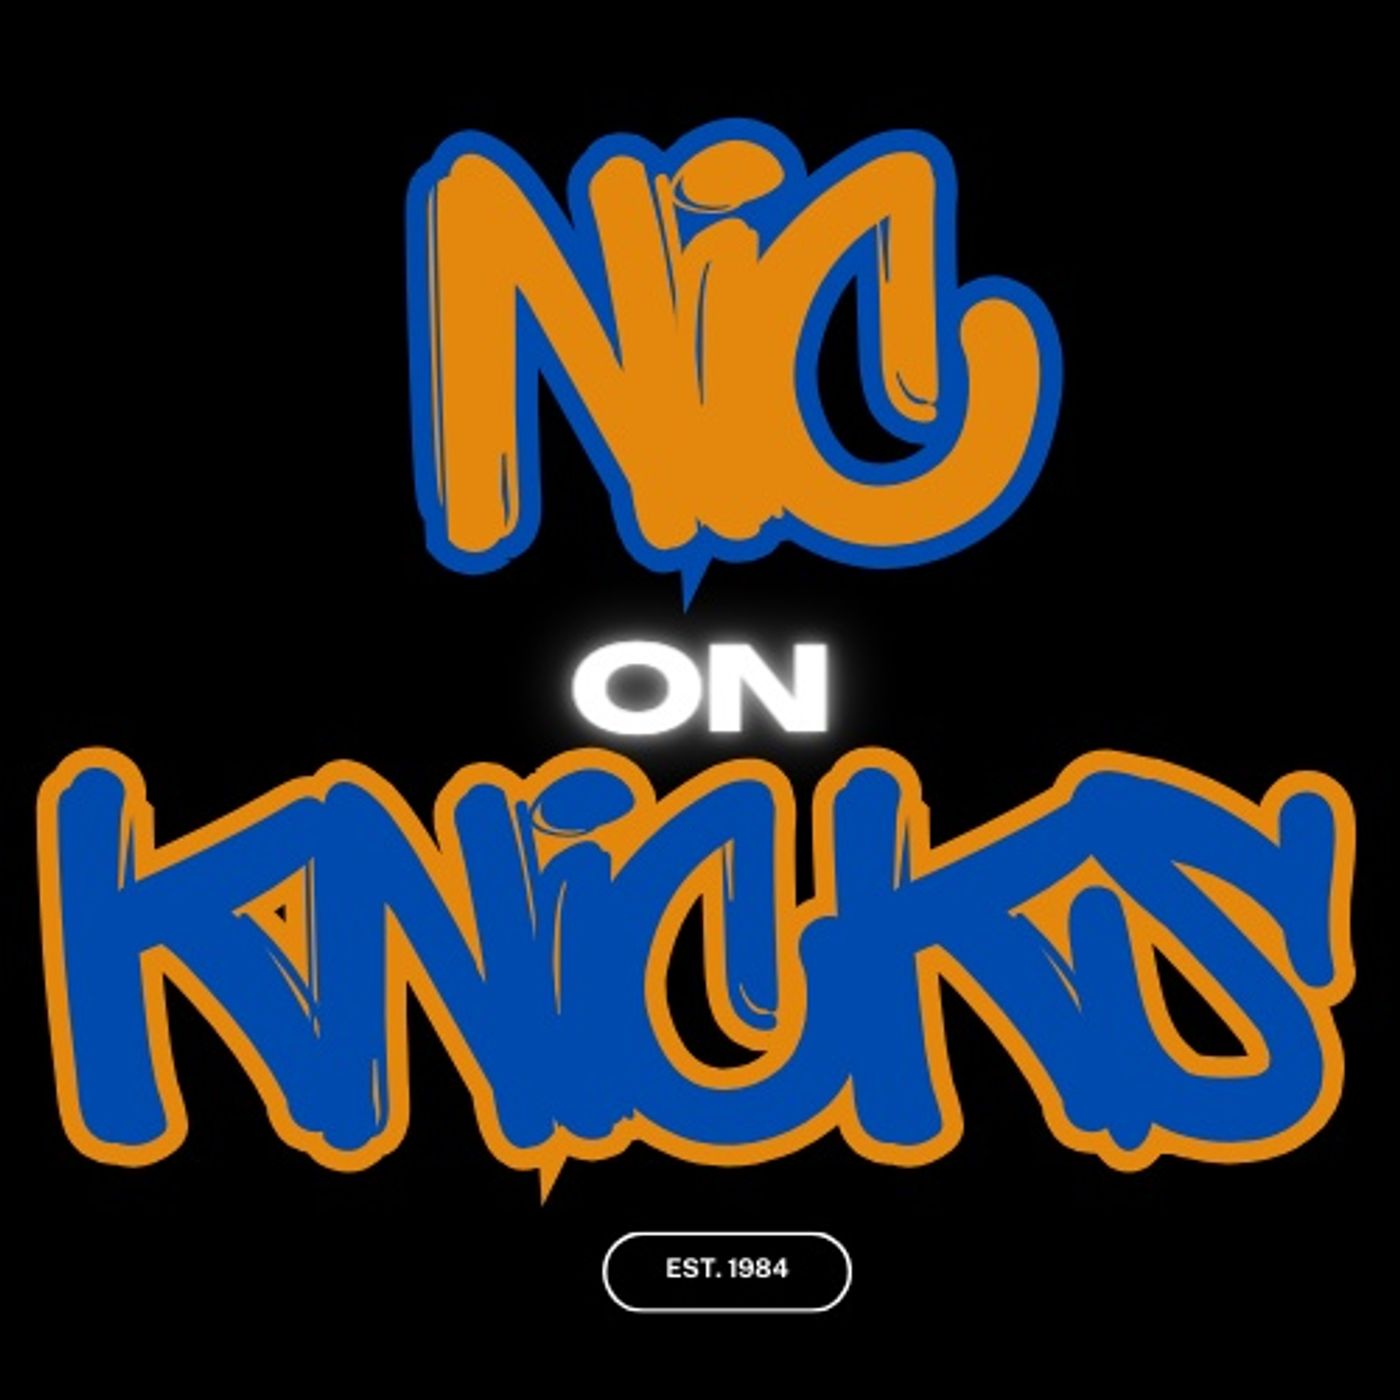 Nic on Knicks